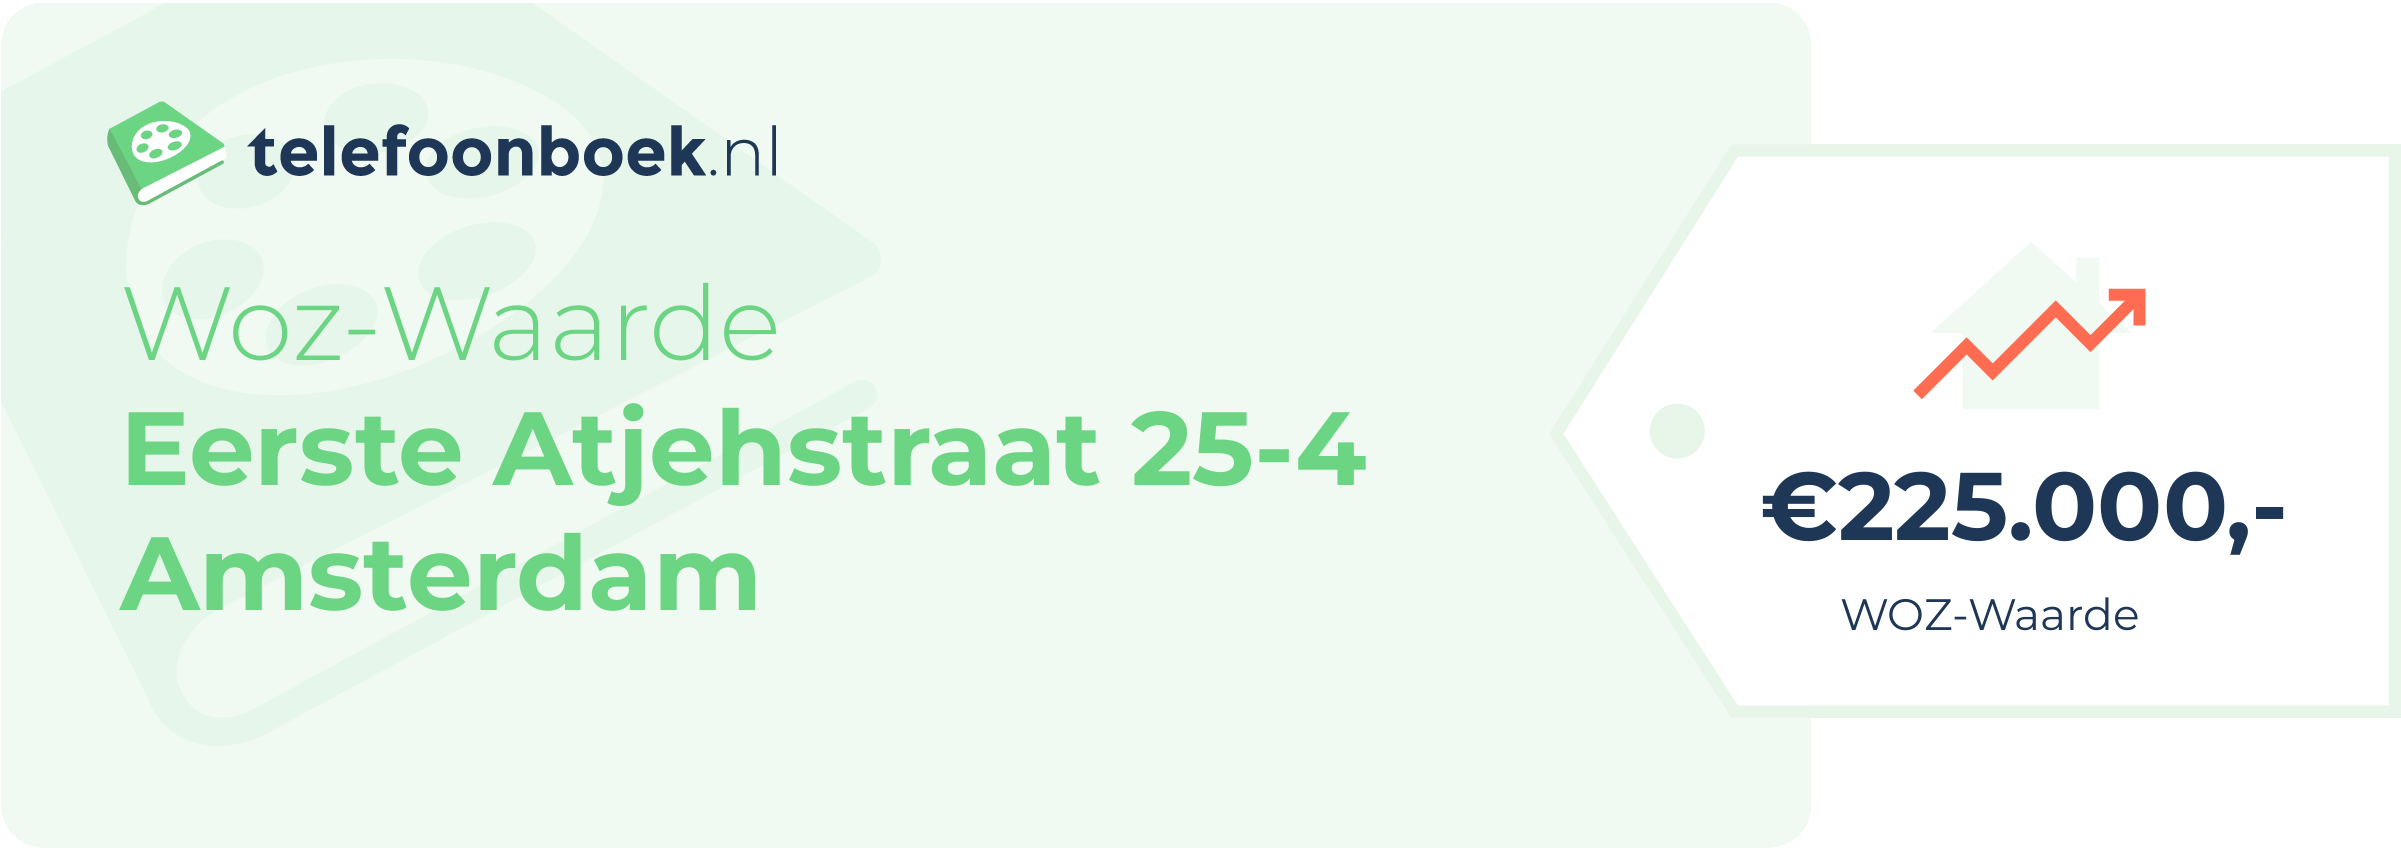 WOZ-waarde Eerste Atjehstraat 25-4 Amsterdam